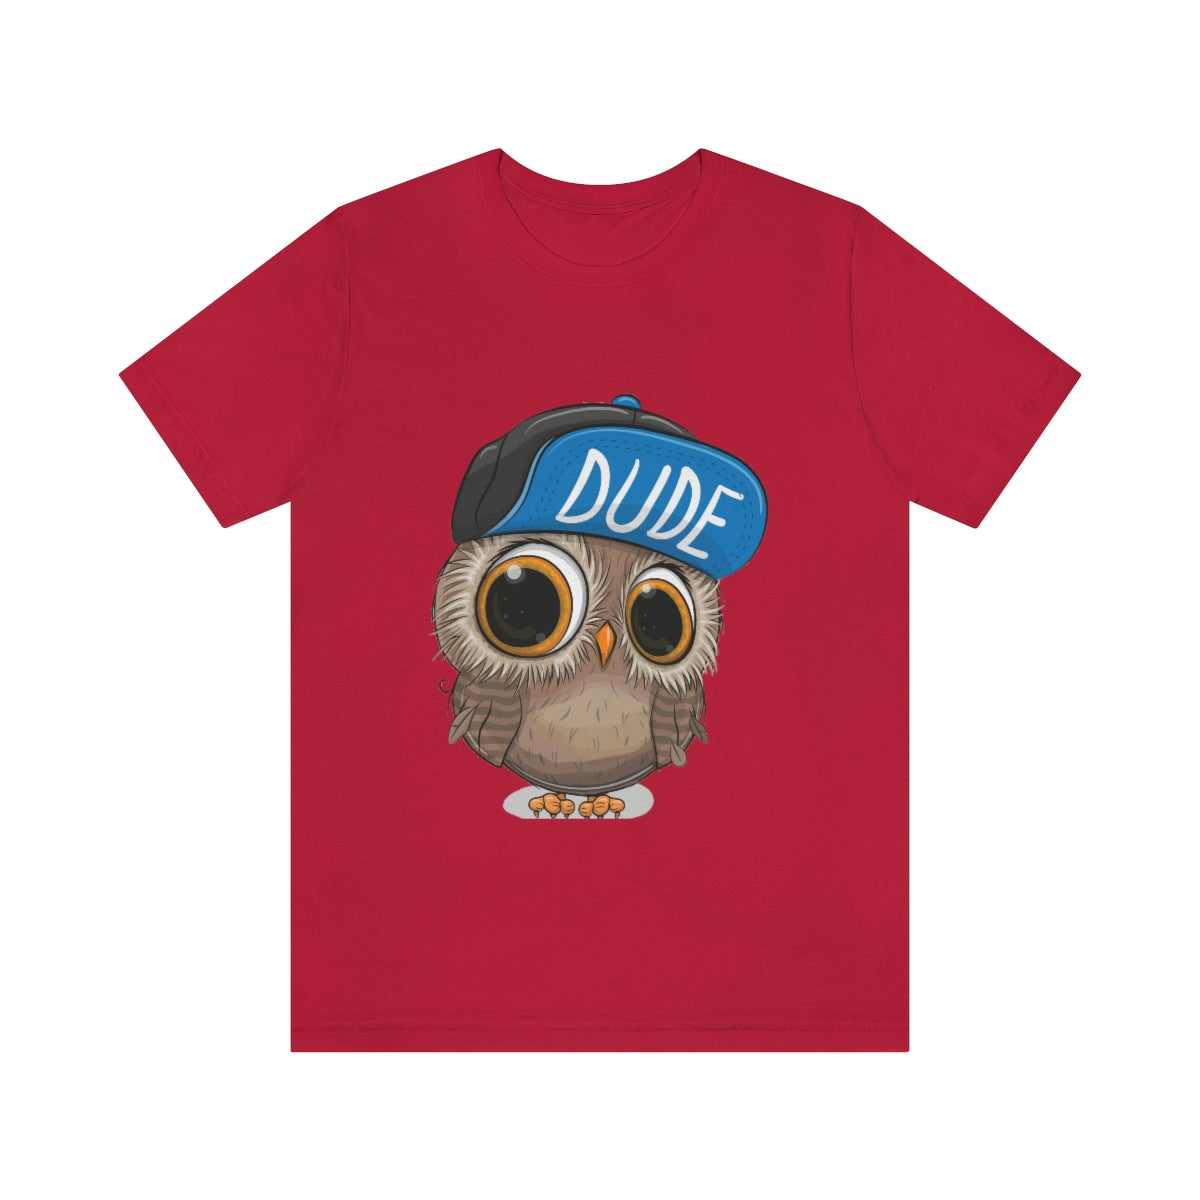 Unisex Jersey Short Sleeve Tee "Cute Cartoon Owl in a cap"